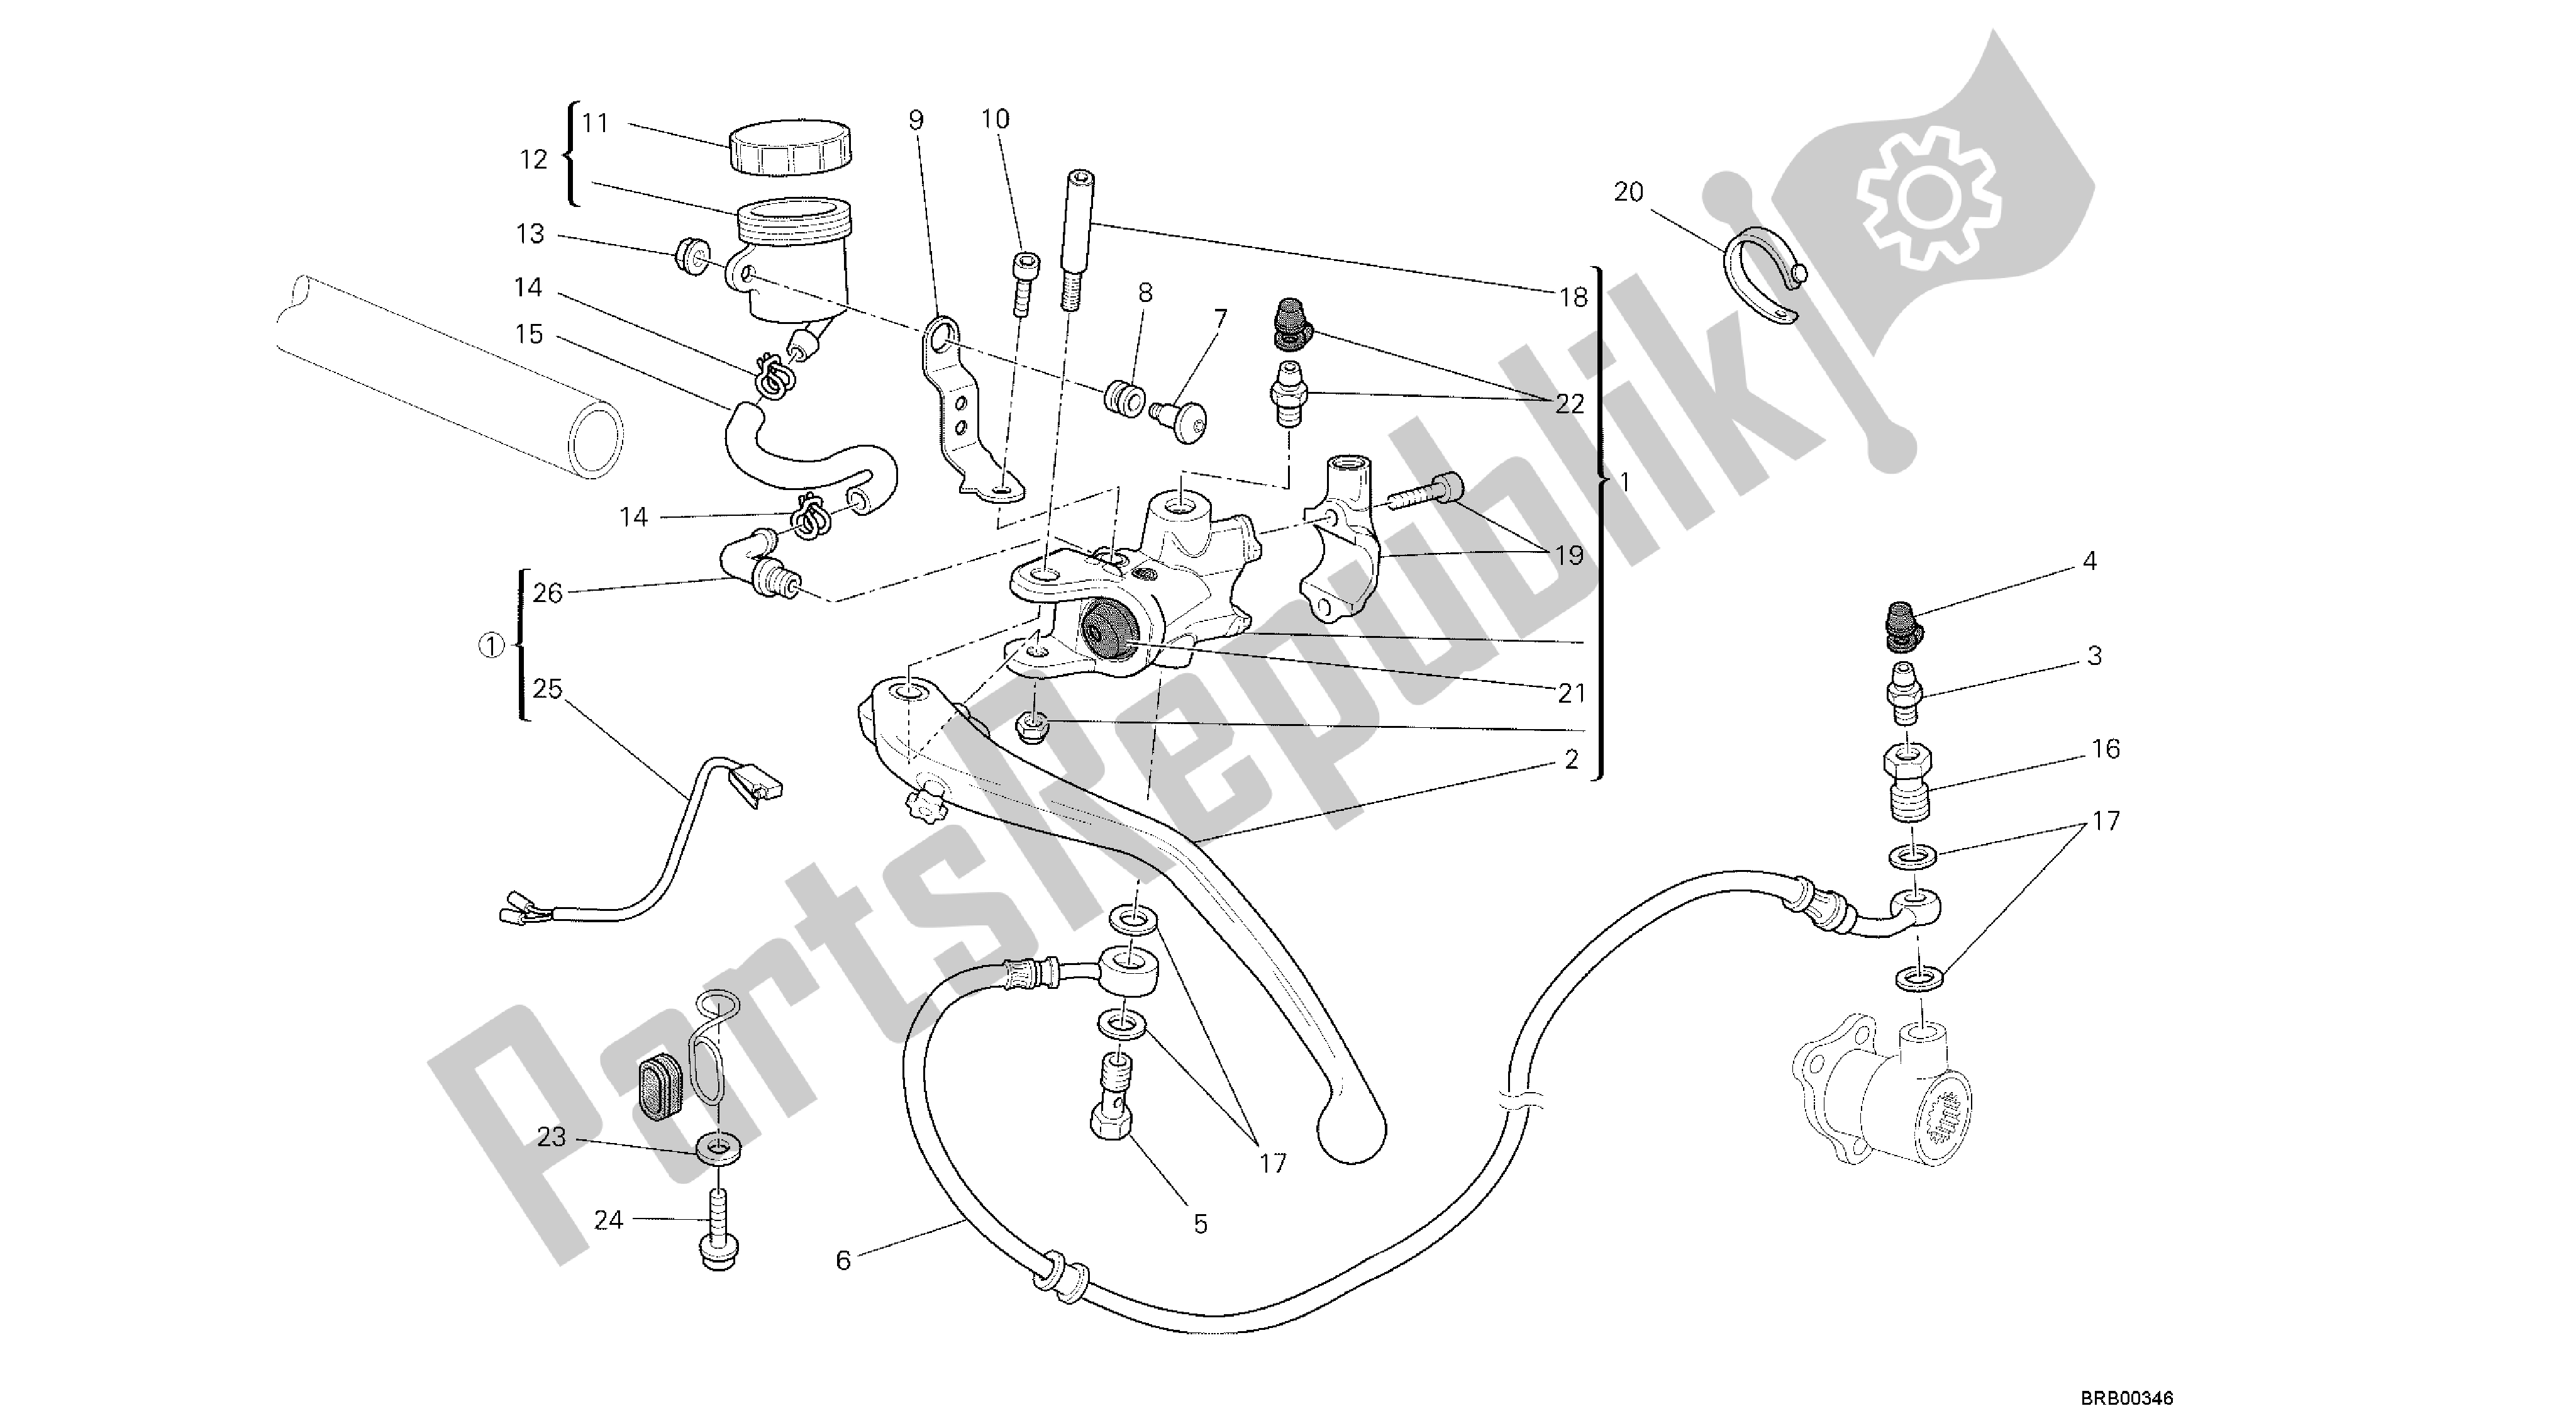 Tutte le parti per il Disegno 027 - Pompa Frizione [mod: M1100dsl; Xst: Aus, Chn, Eur, Jap] Group Fr Ame del Ducati Monster 1100 2013